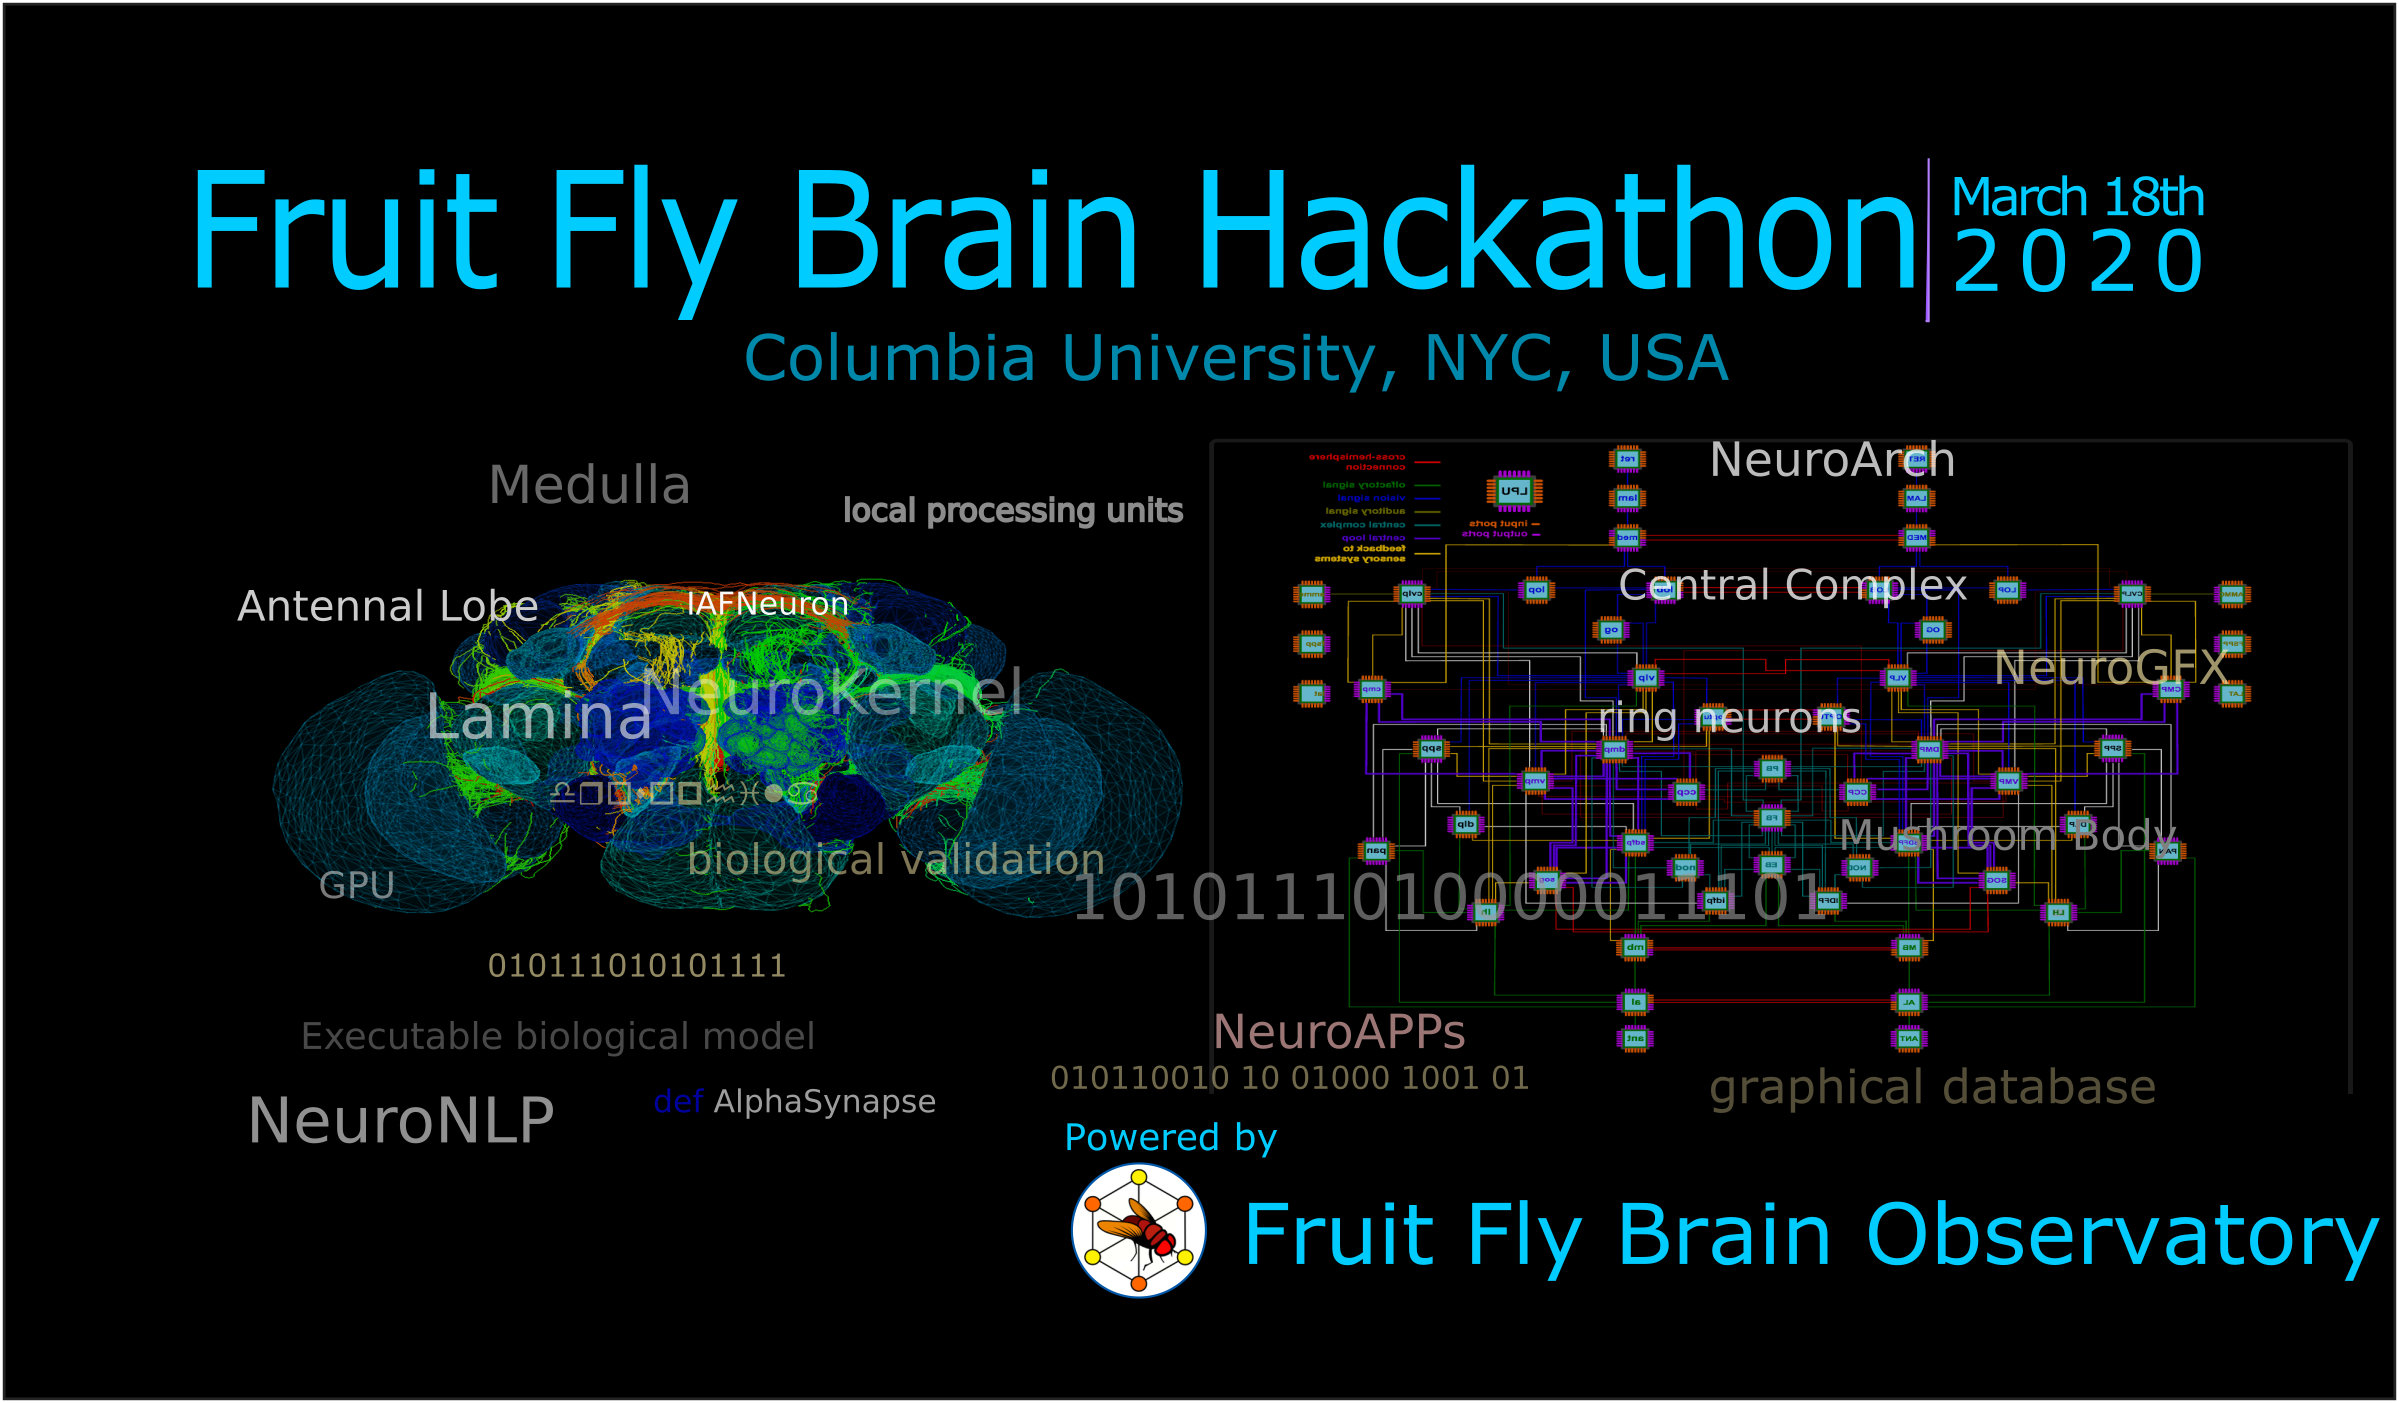 Fruit Fly Brain Hackathon 2020